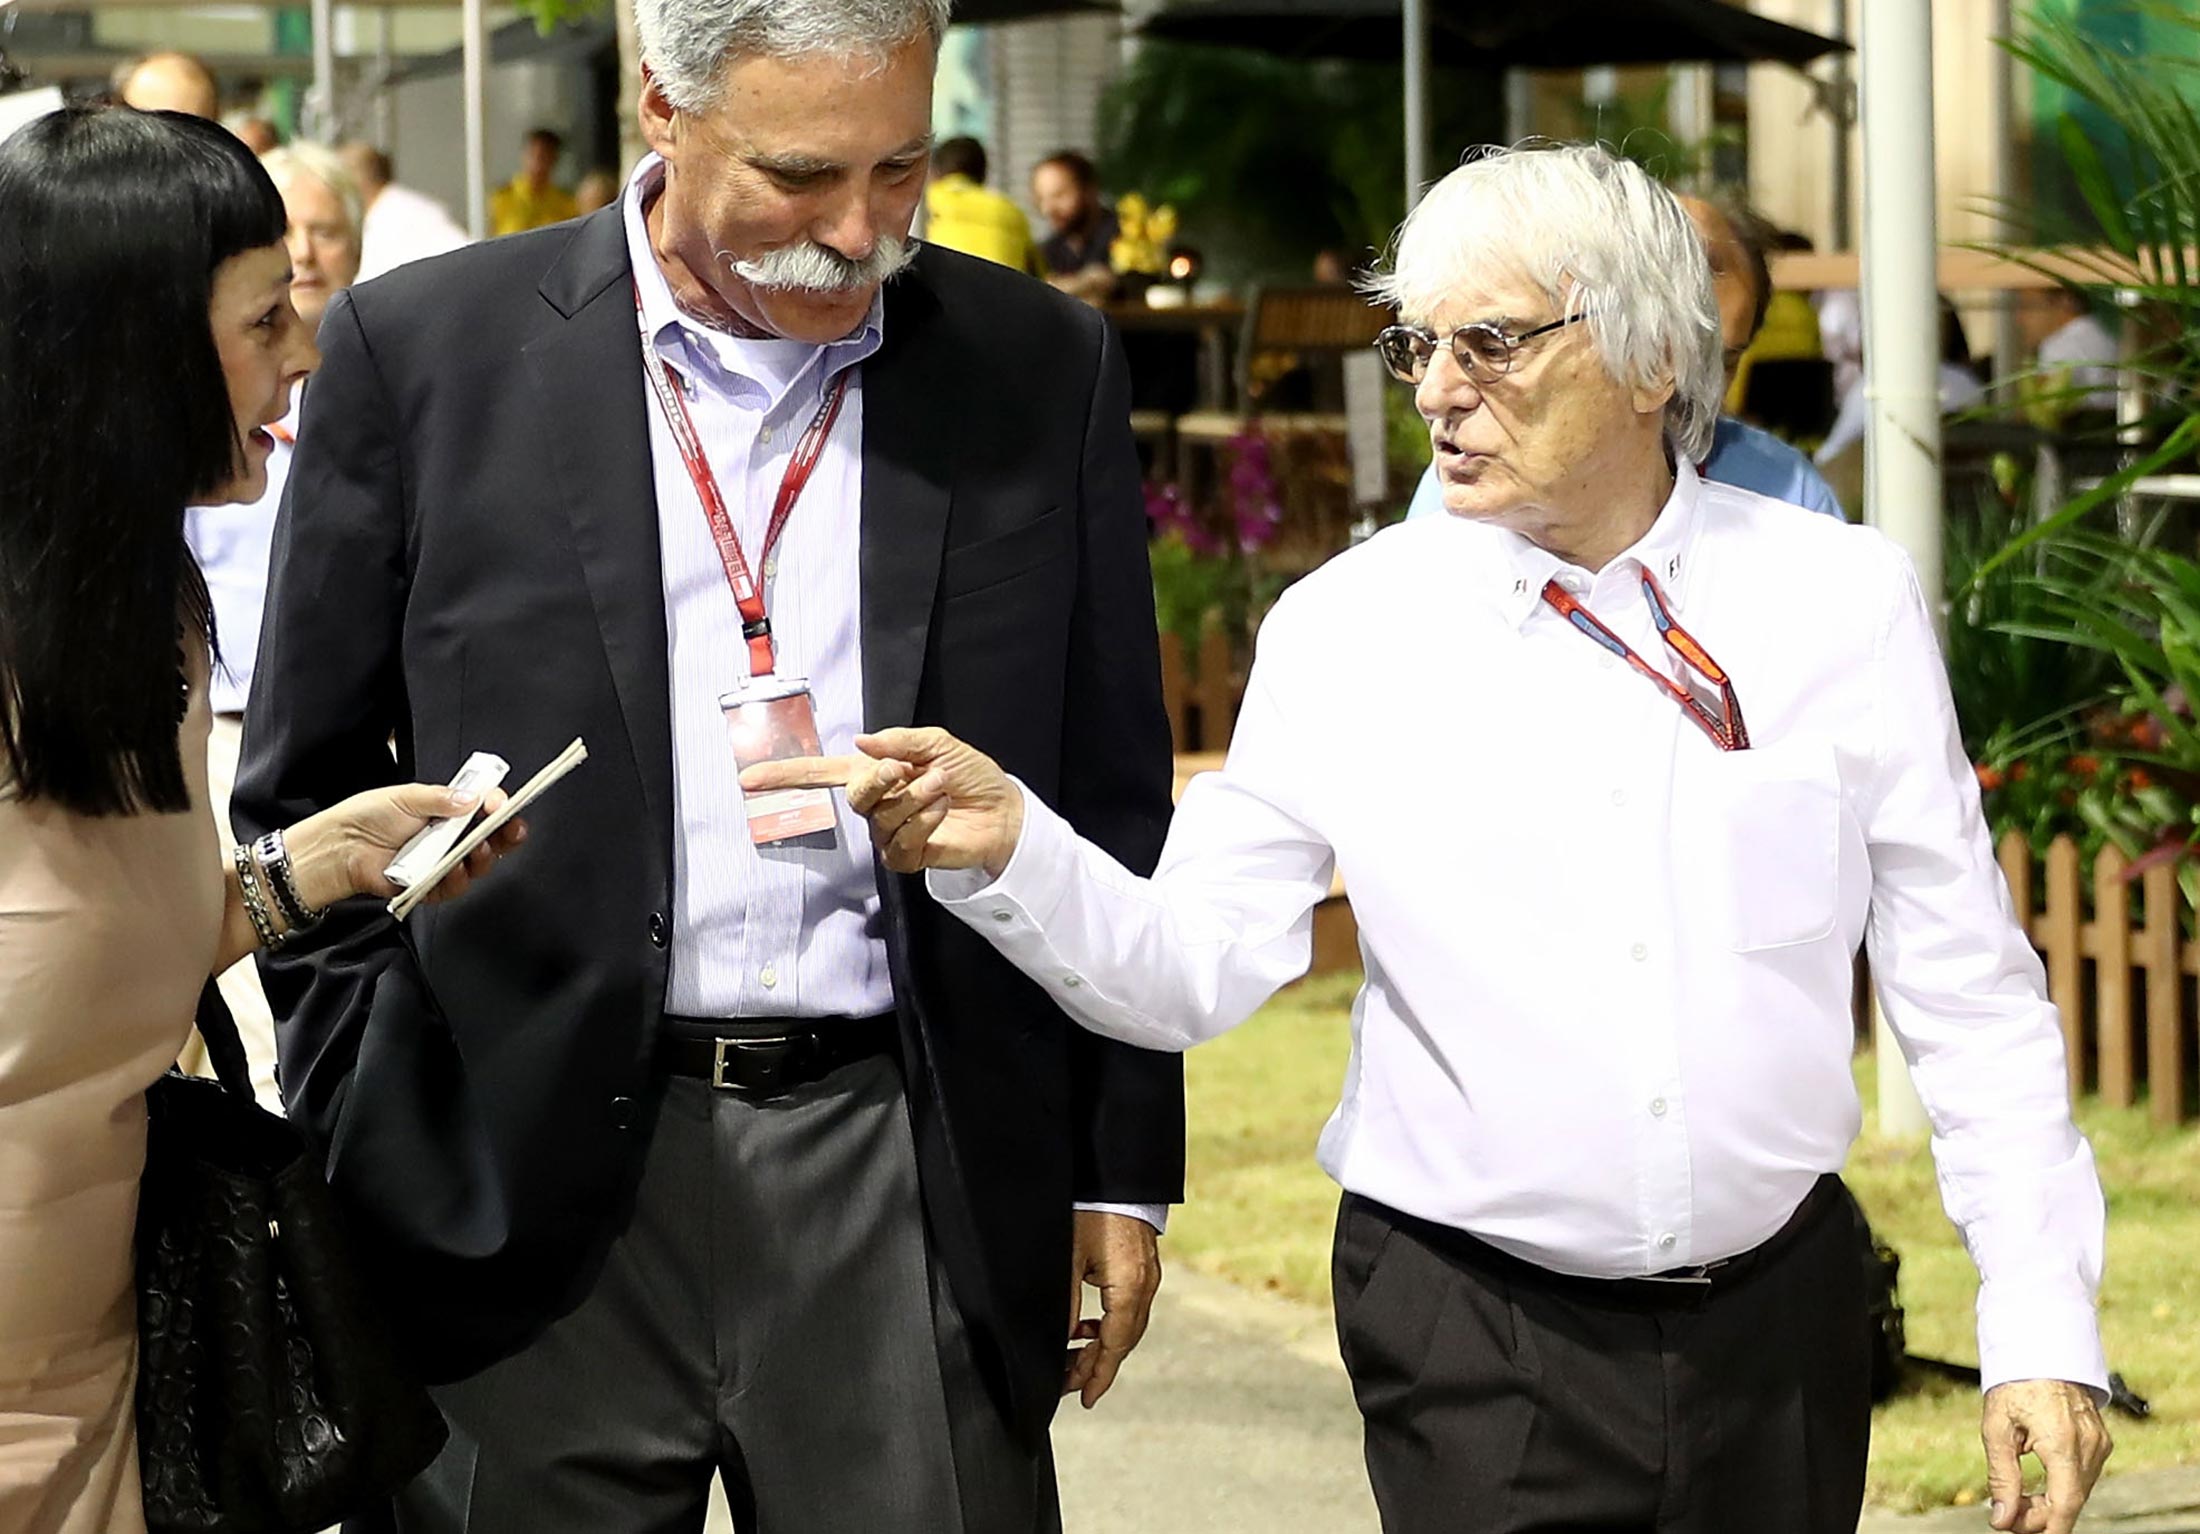 What is Bernie Ecclestone's net worth? The Chairman Emeritus of Formula One